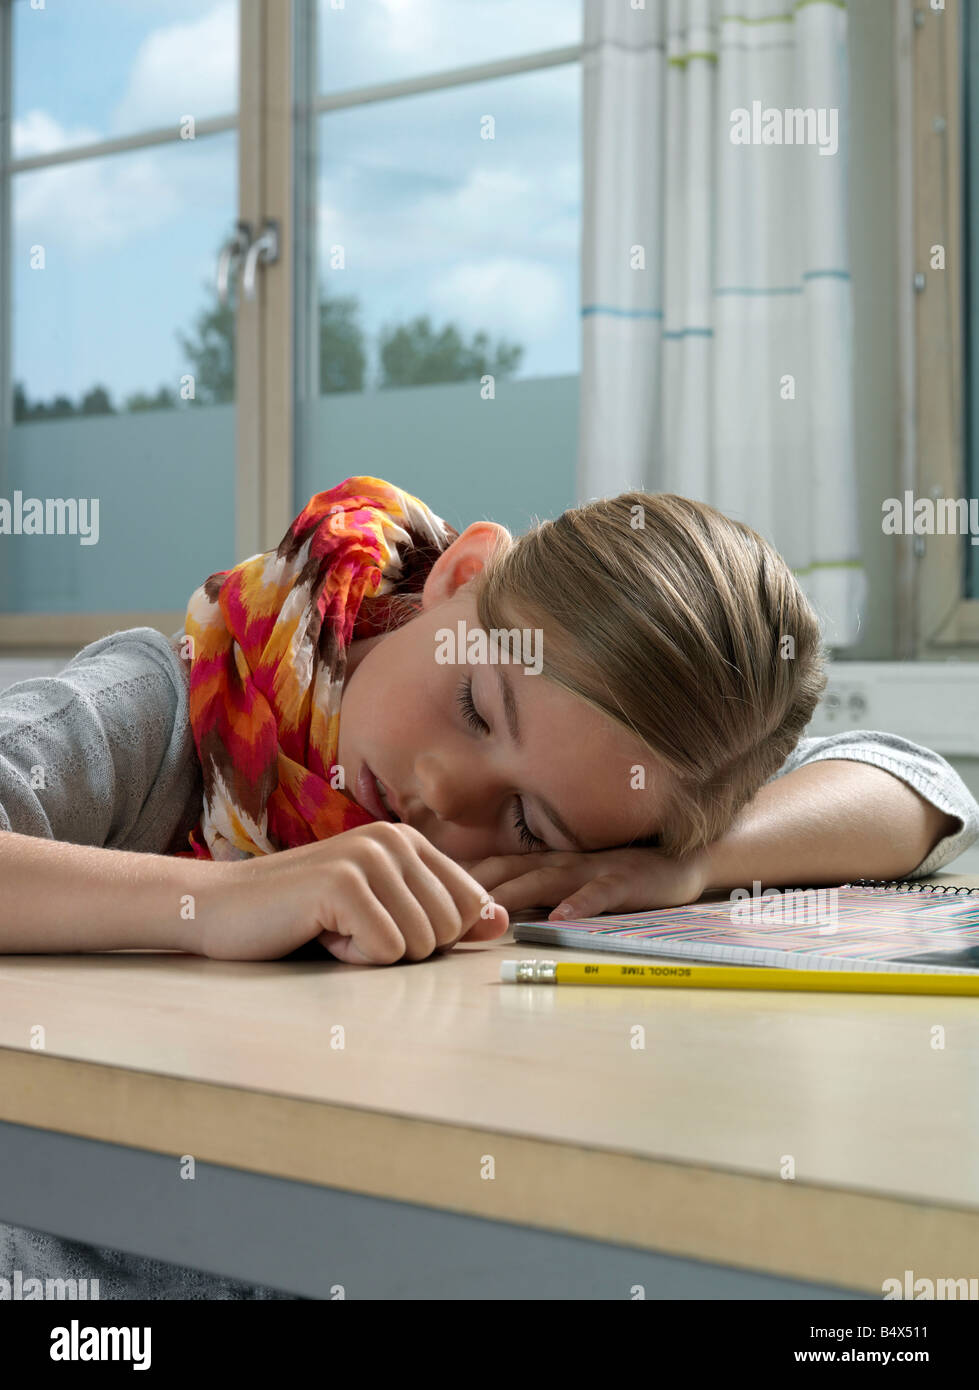 Girl resting on school table Stock Photo